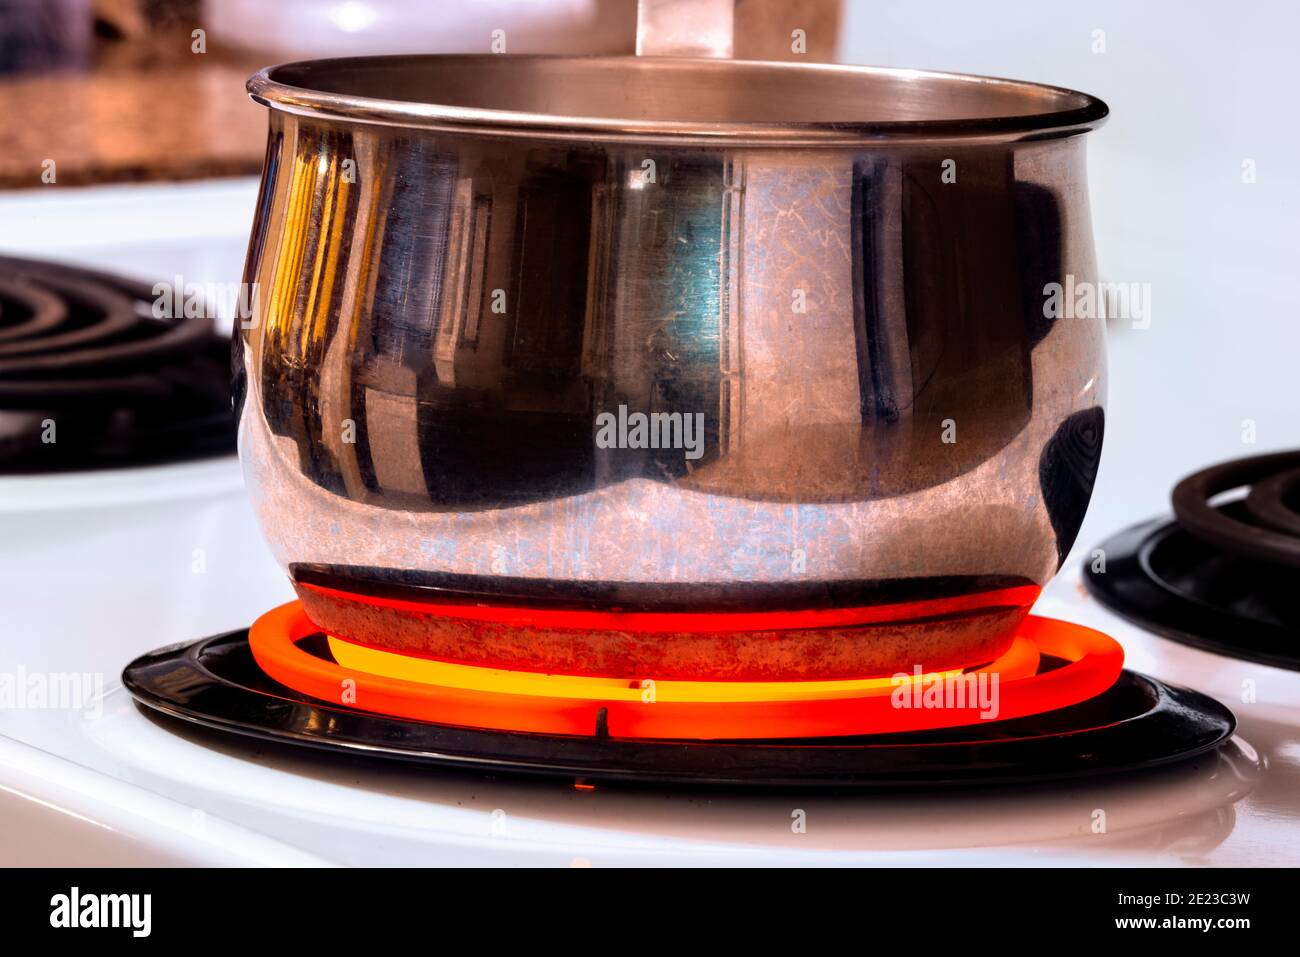 https://c8.alamy.com/comp/2E23C3W/horizontal-shot-of-a-cooking-pot-on-a-very-hot-stove-top-burner-2E23C3W.jpg